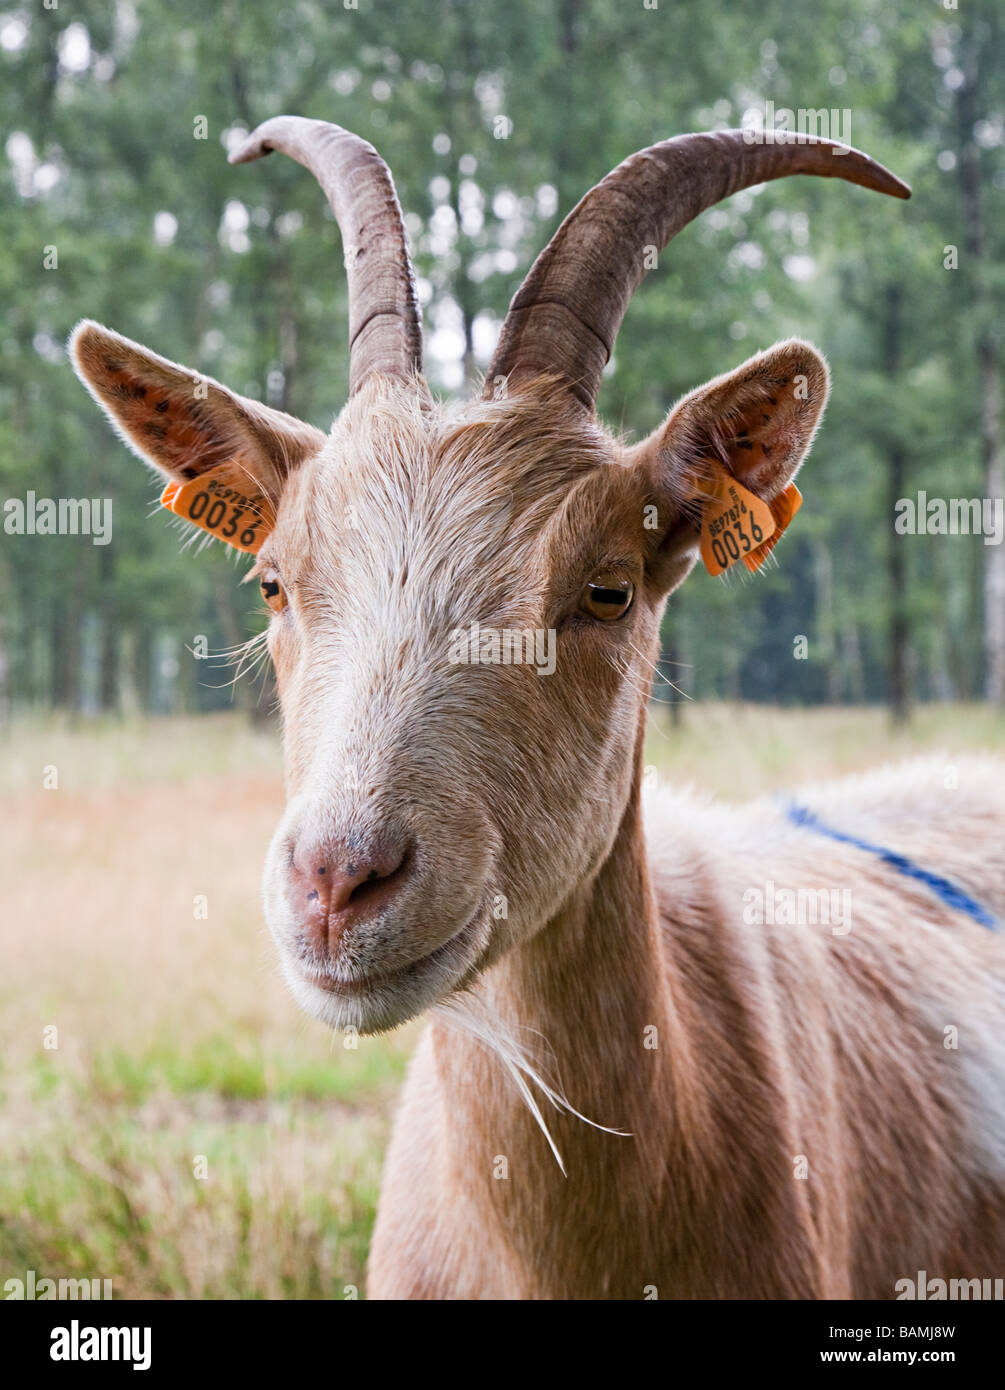 Cabra con etiquetas en las orejas reserva natural parque Kalmthoutse heide Kalmthout Bélgica Foto de stock